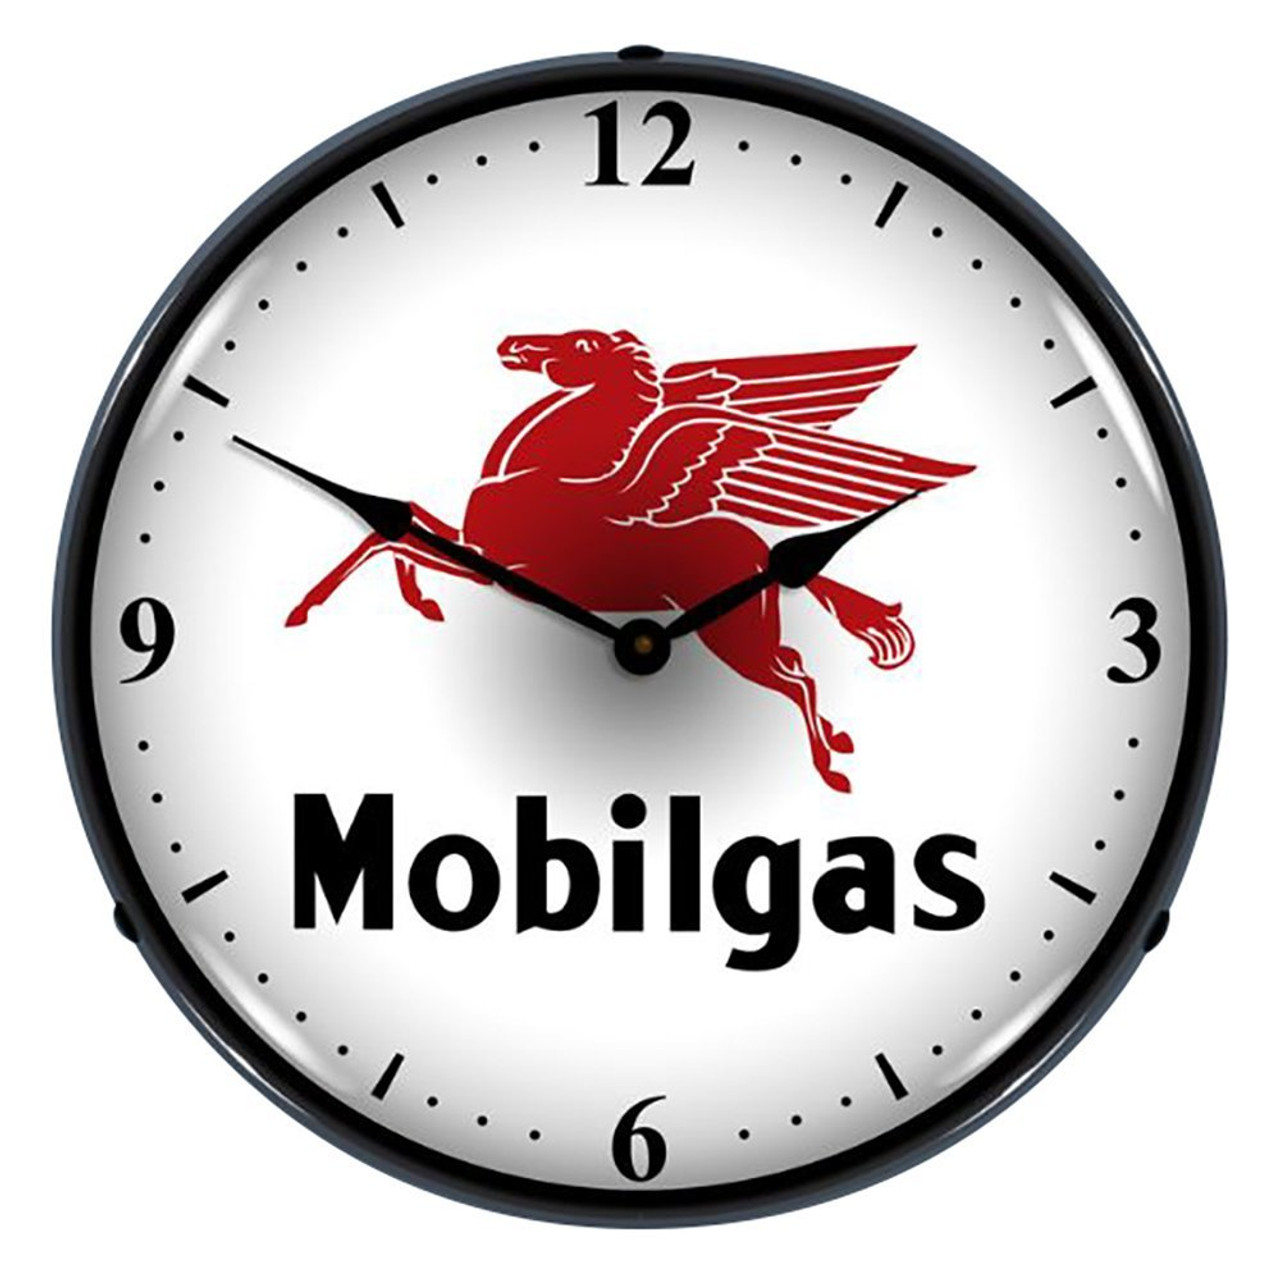 Mobilgas Lighted Wall Clock